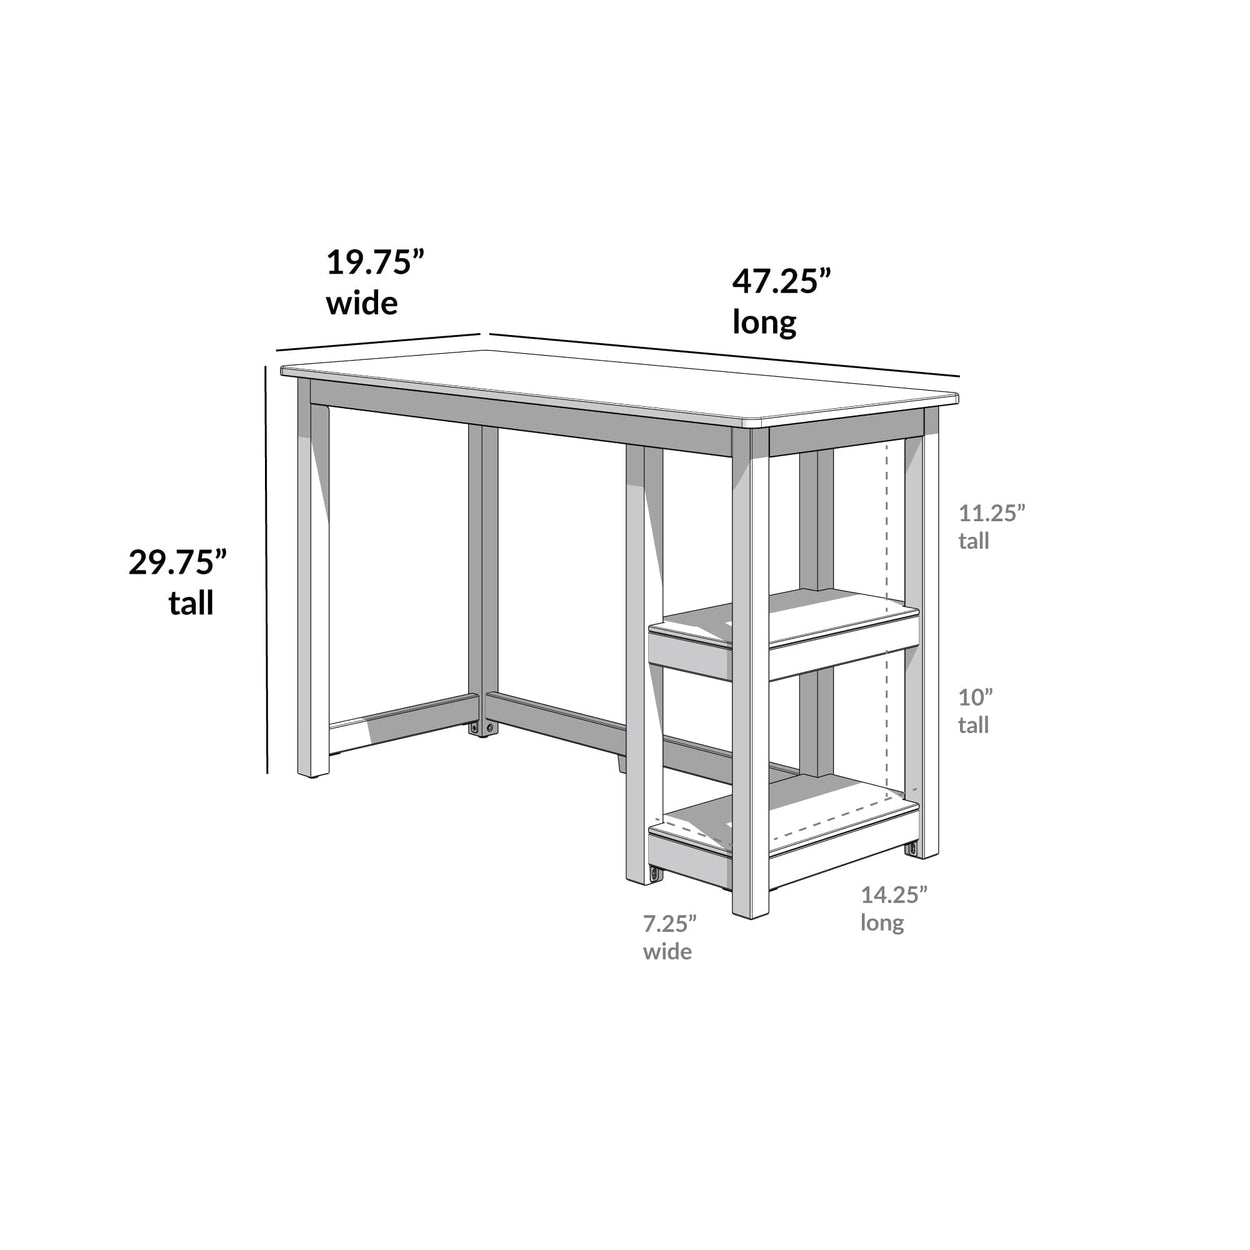 181205-005 : Furniture Desk with Bookshelves - 47 inches, Espresso